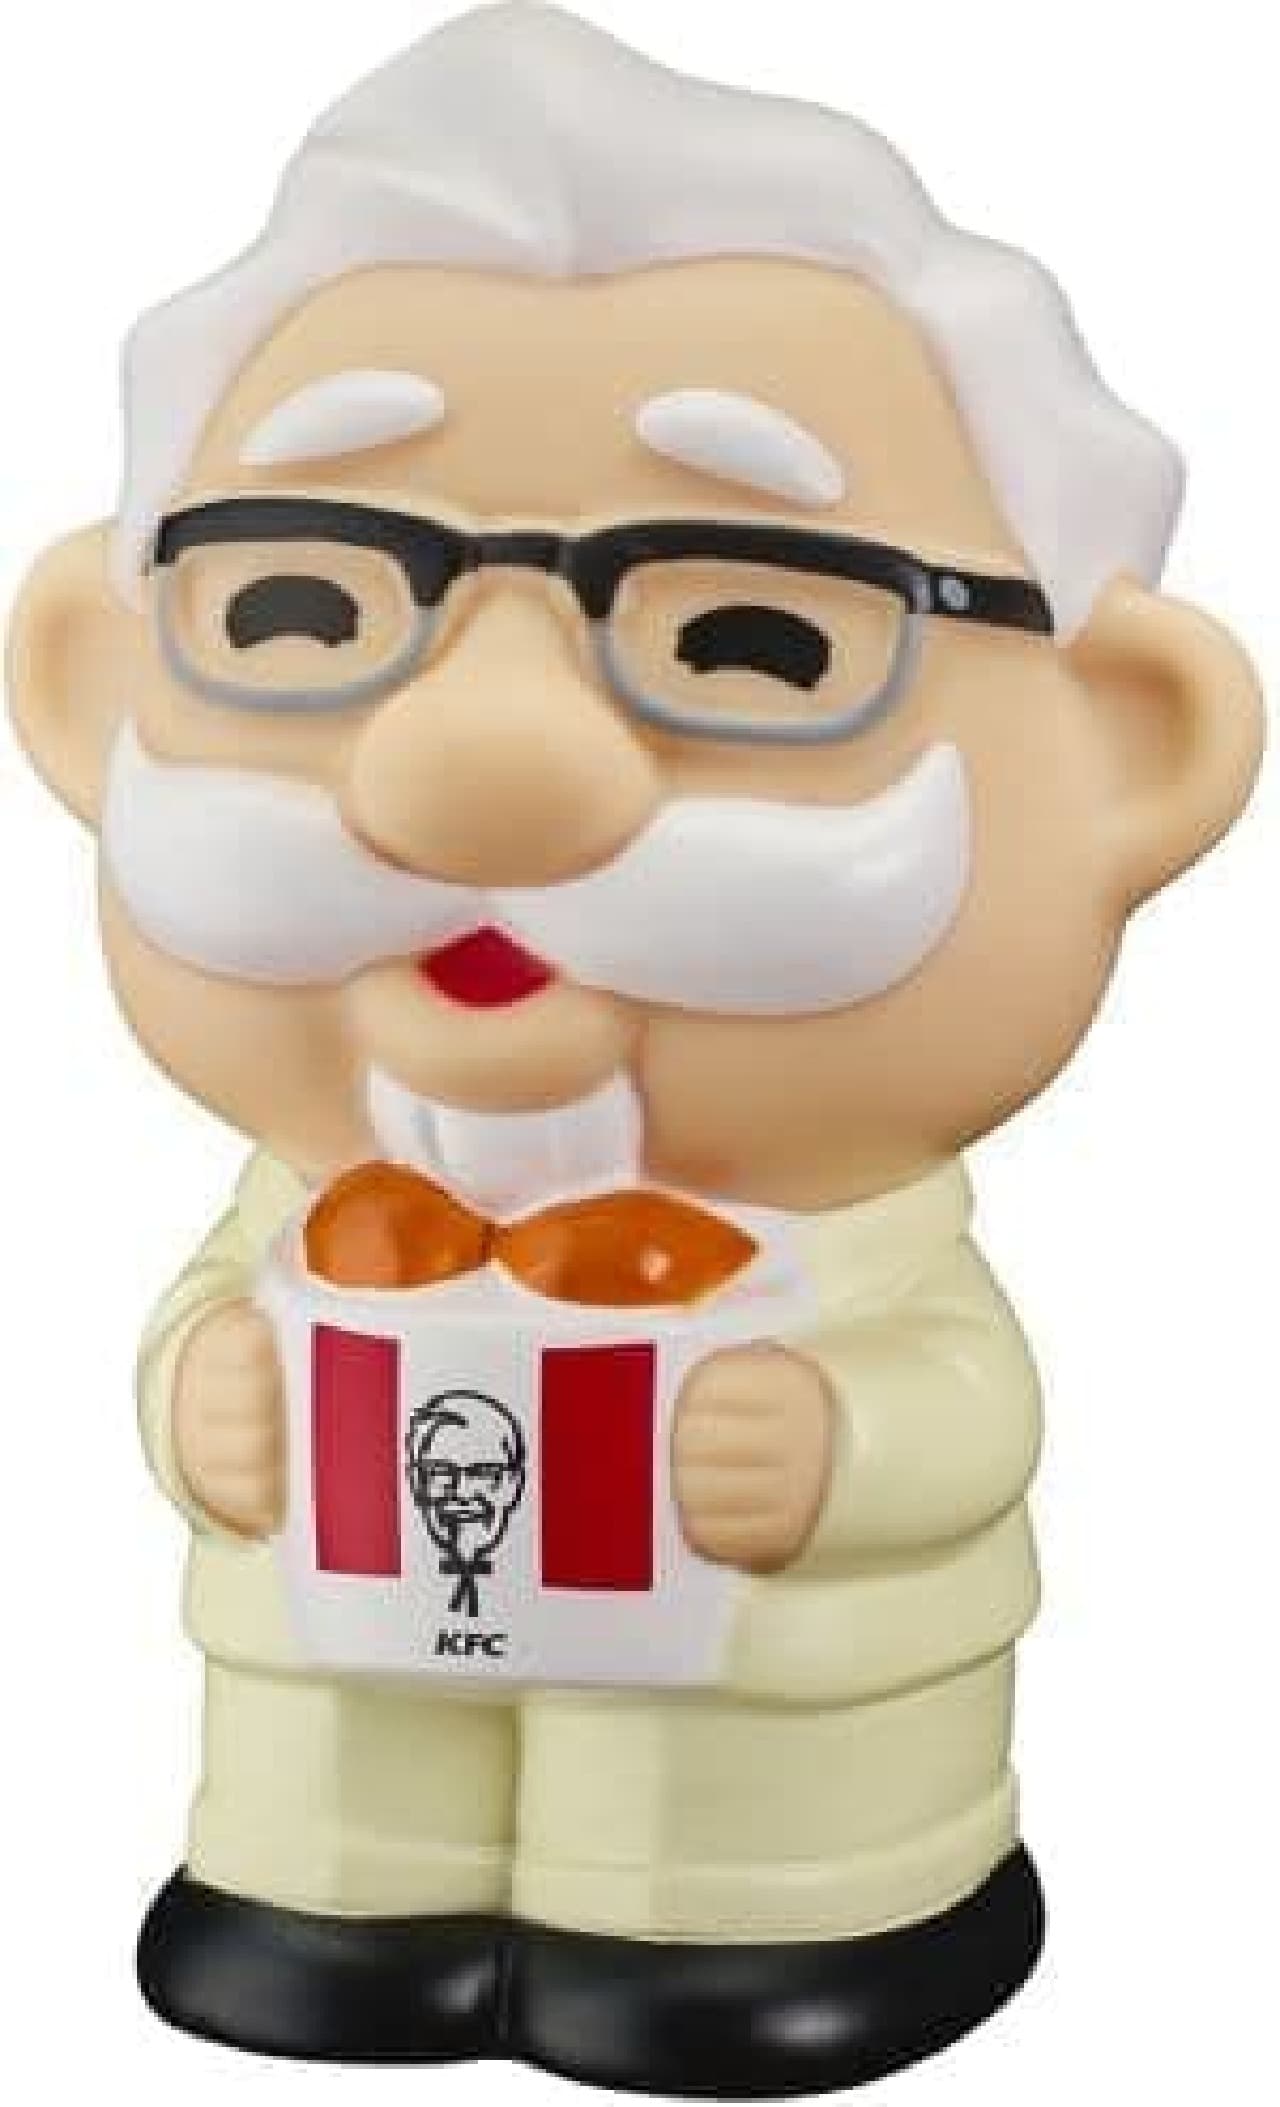 KFC "Charity Kernel Piggy Bank"